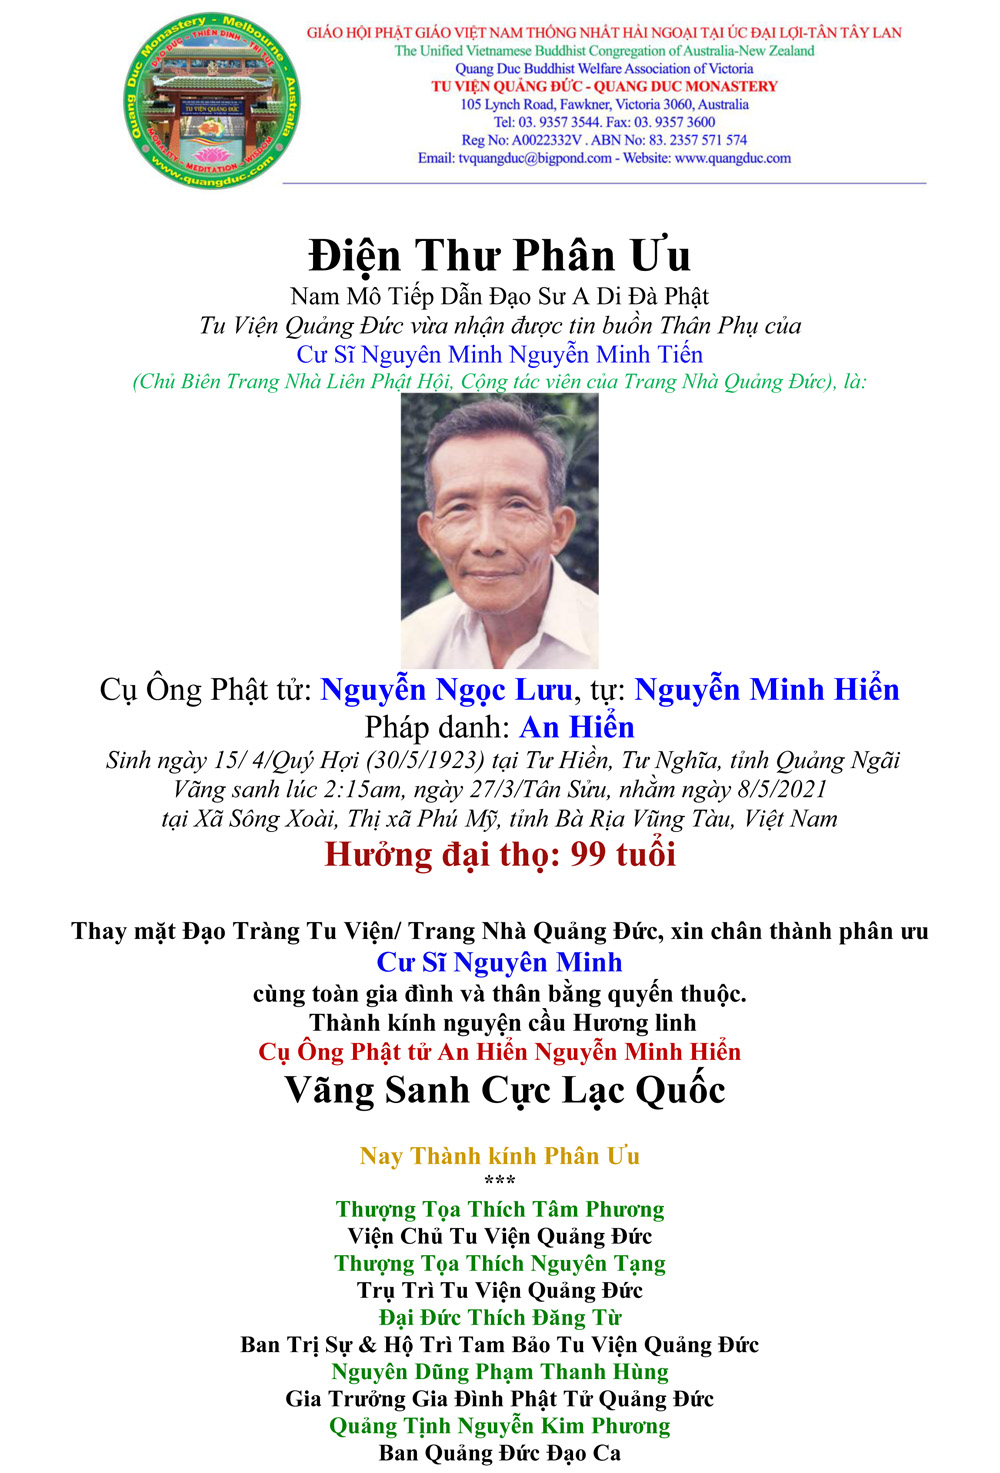 Dien Thu Phan Uu_Gia Dinh Nguyen Minh Nguyen Minh Tien